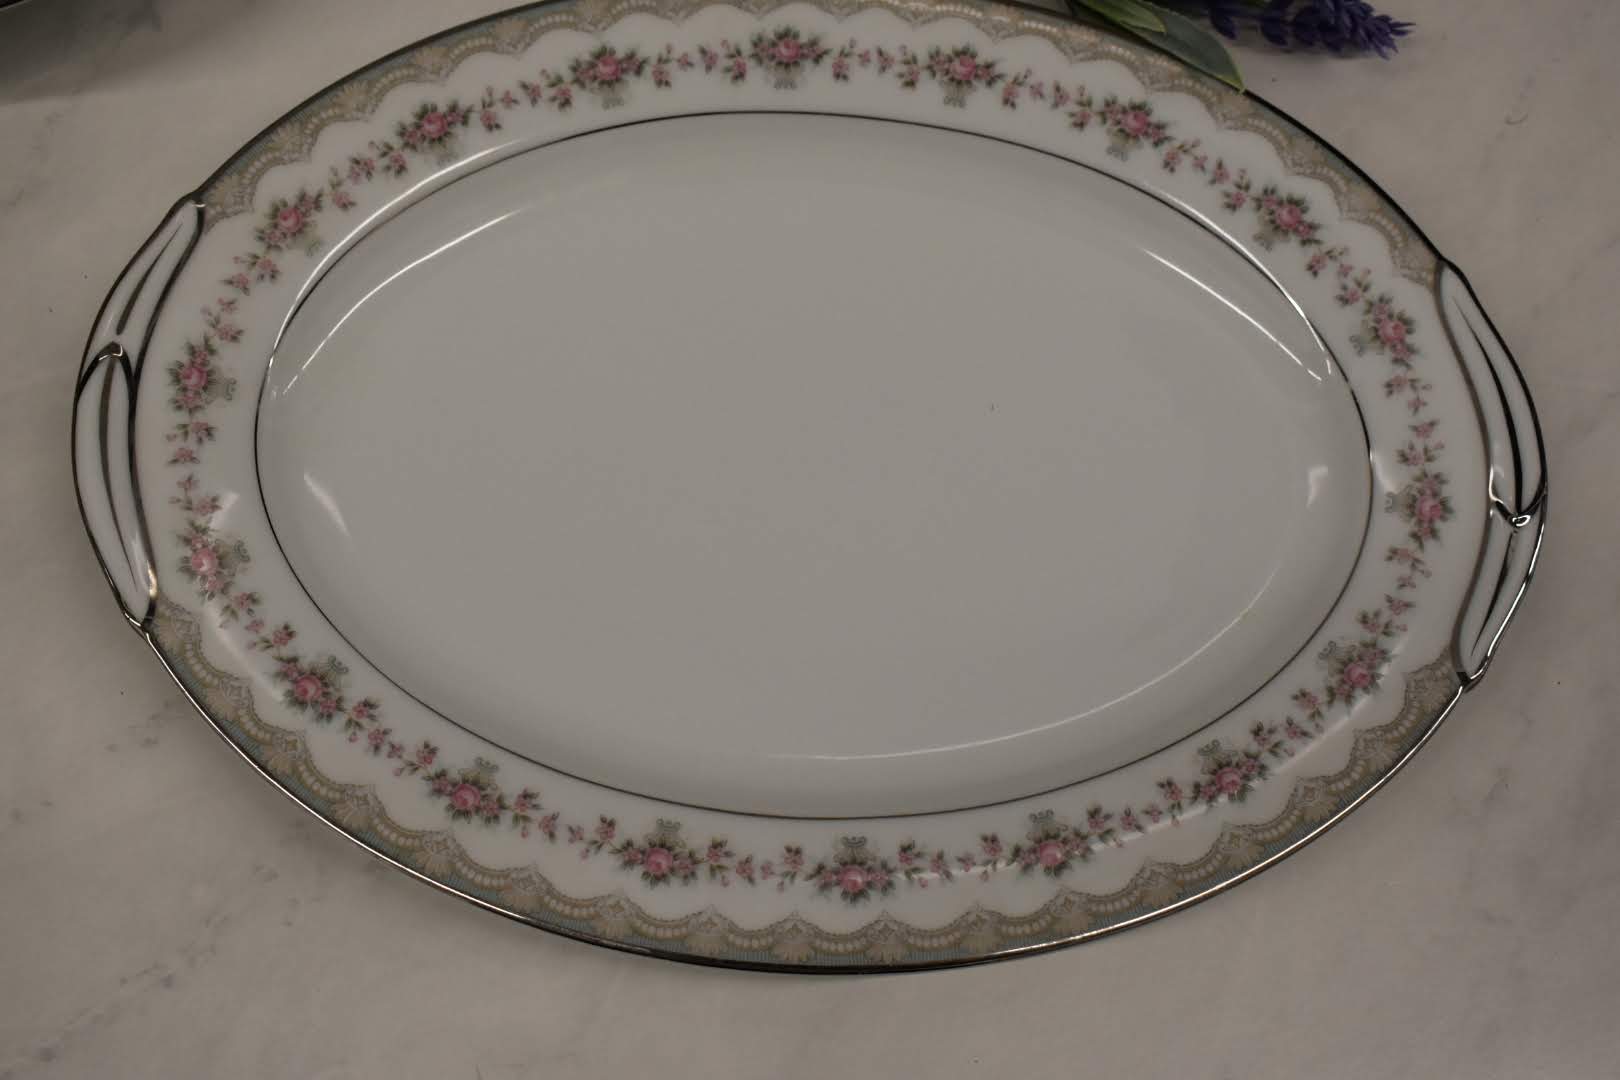 Noritake Glenwood - Fine Porcelain China - Platinum Rim - 5770 pattern - Large Platter